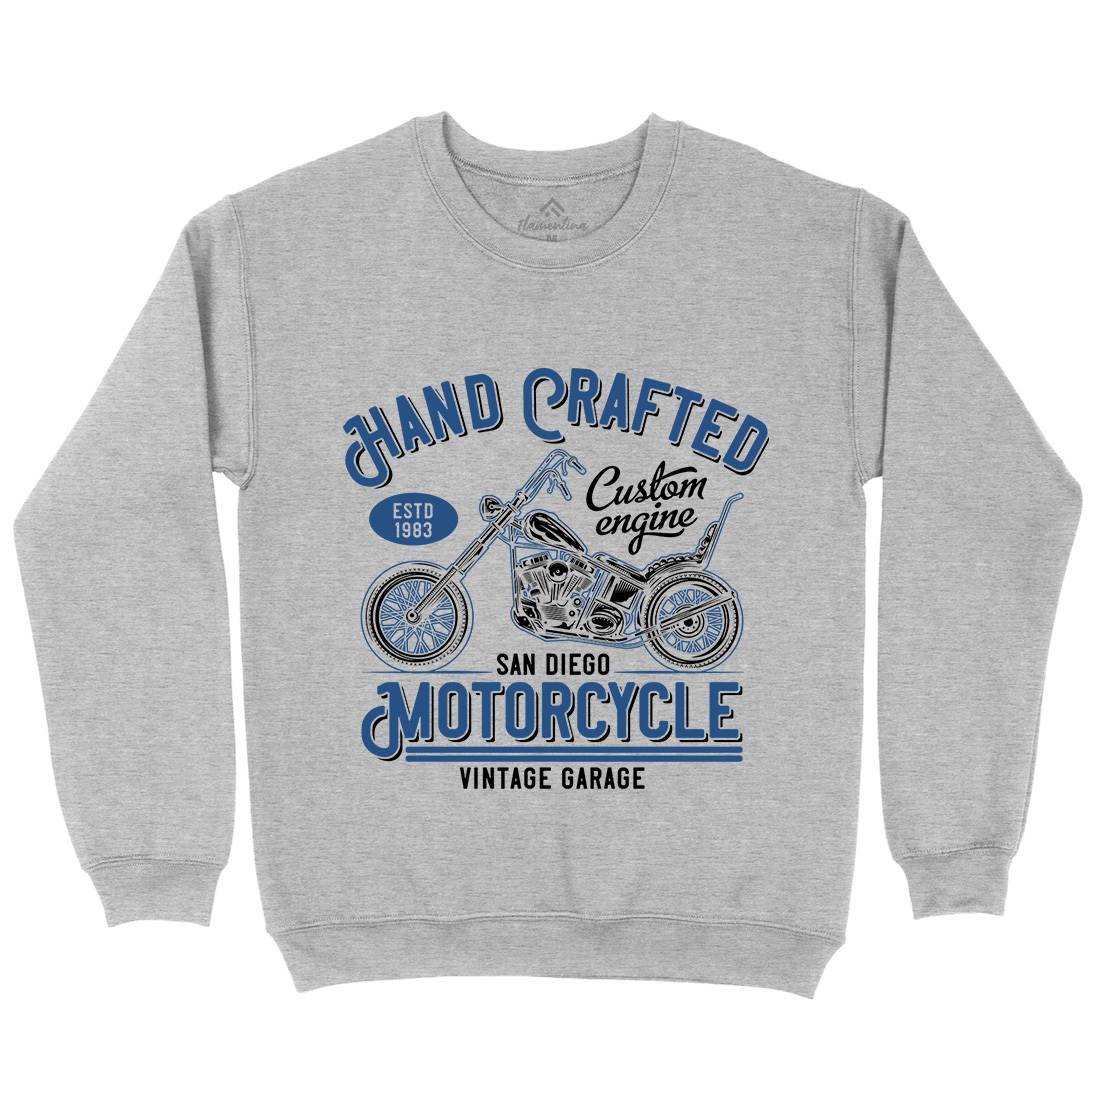 Hand Crafted Kids Crew Neck Sweatshirt Motorcycles B838